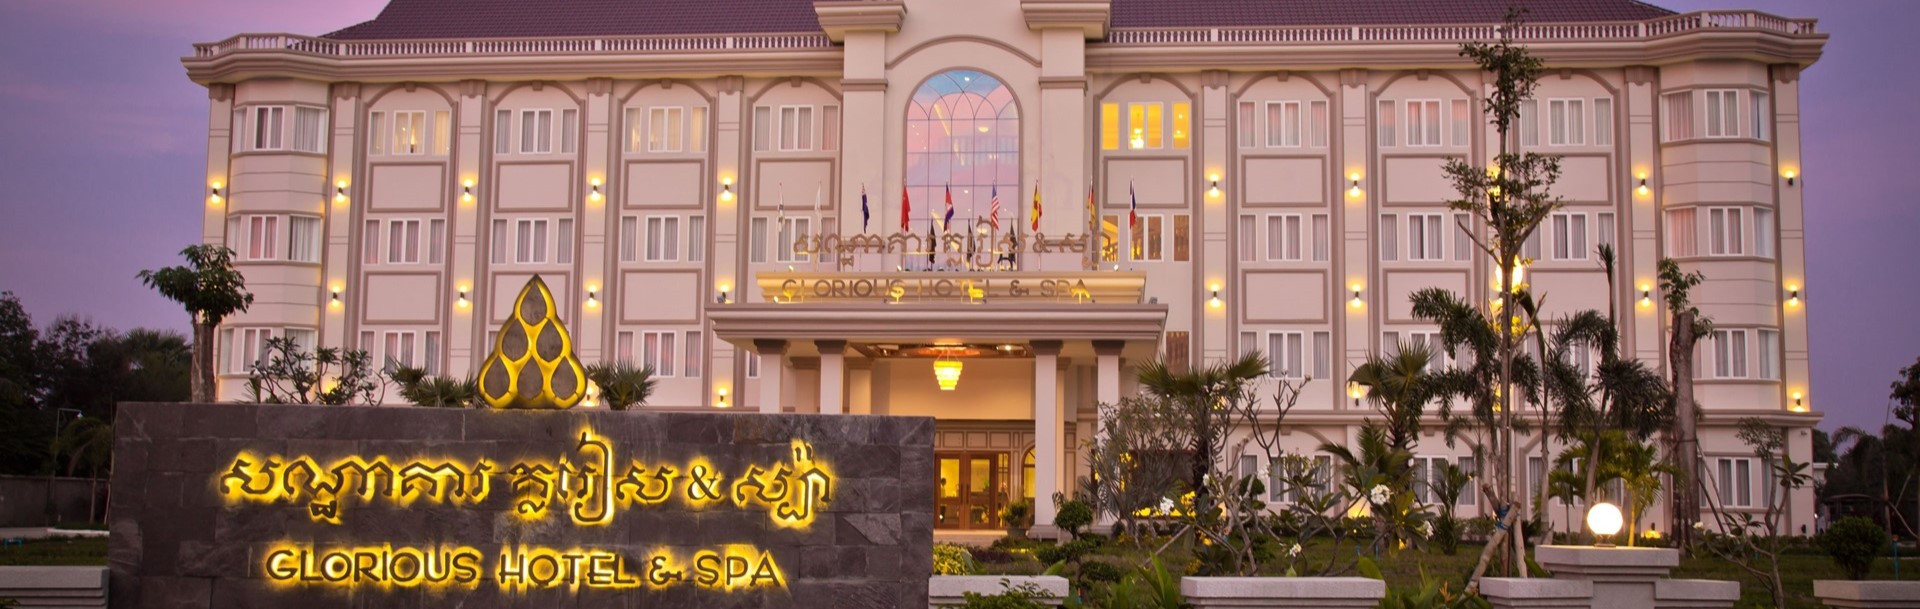 Glorious Hotel & Spa  